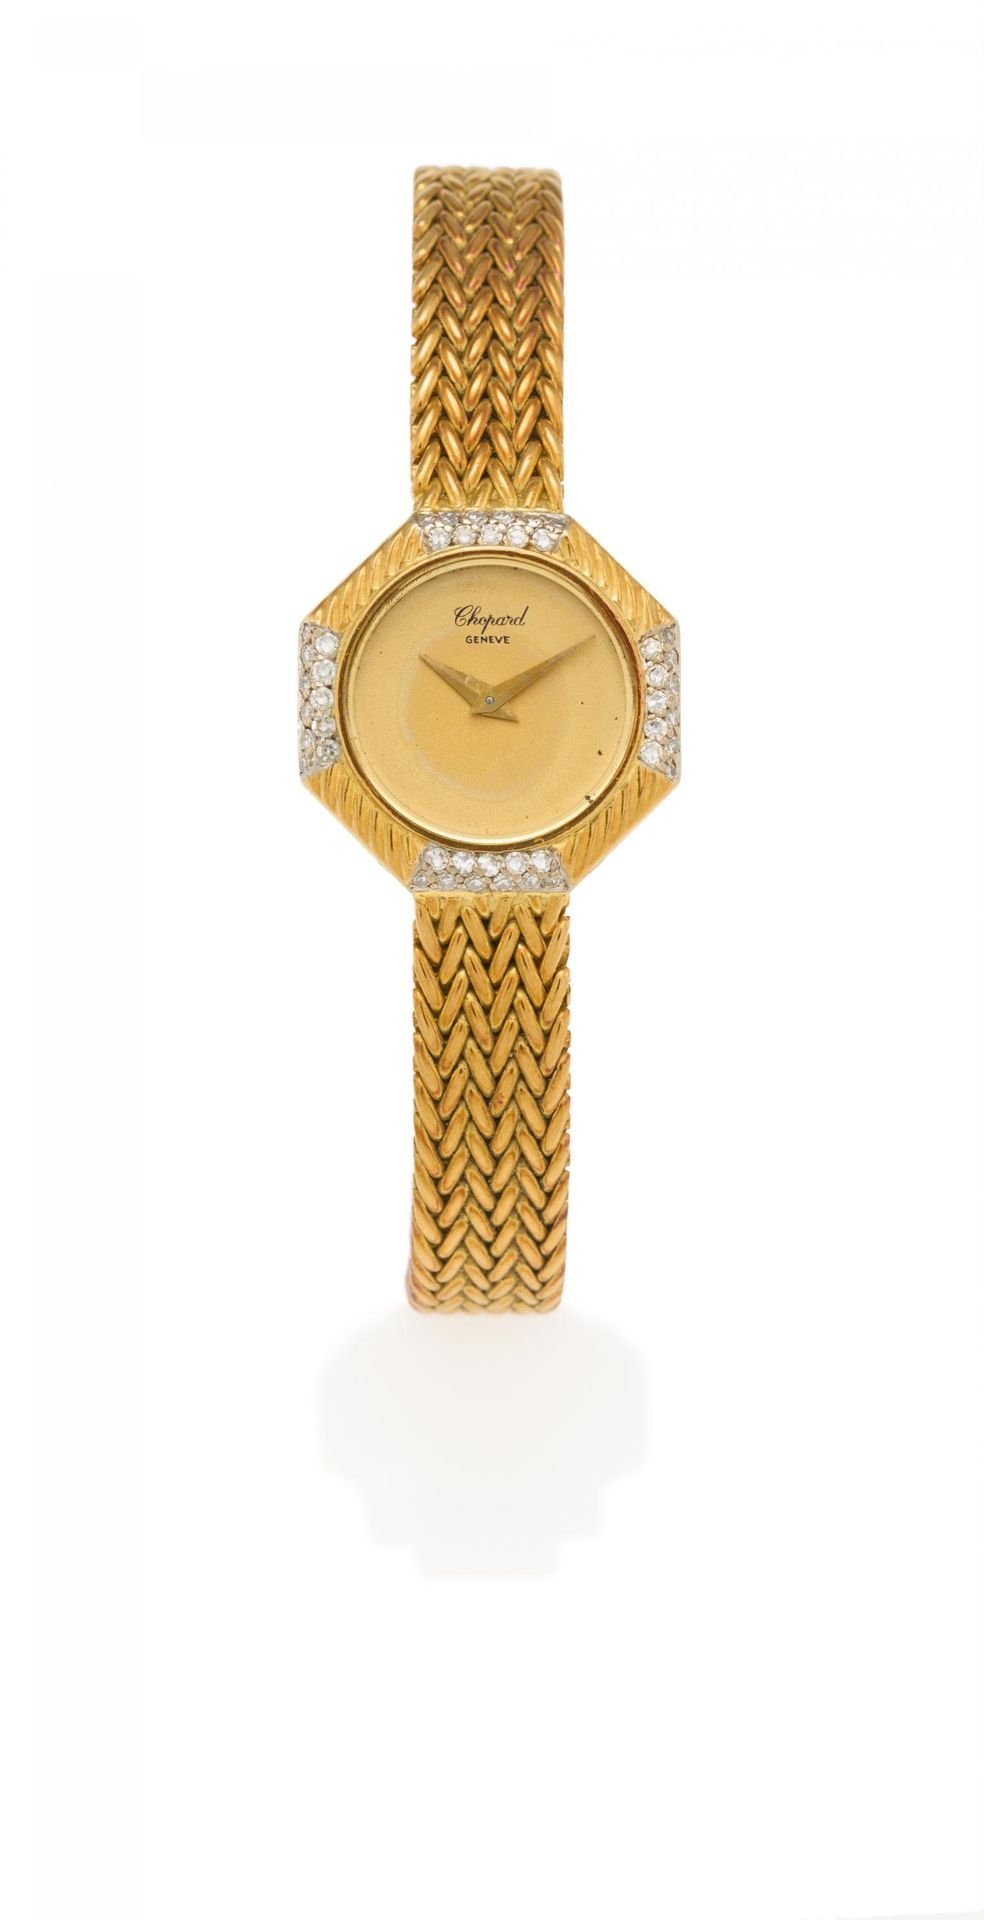 CHOPARD CHOPARD
手錶。原产地。 瑞士，日内瓦。
日期： 1970年。
发条。手 动上链，Cal.846。
表壳/表带： 750/-黄金，部分钻石&hellip;